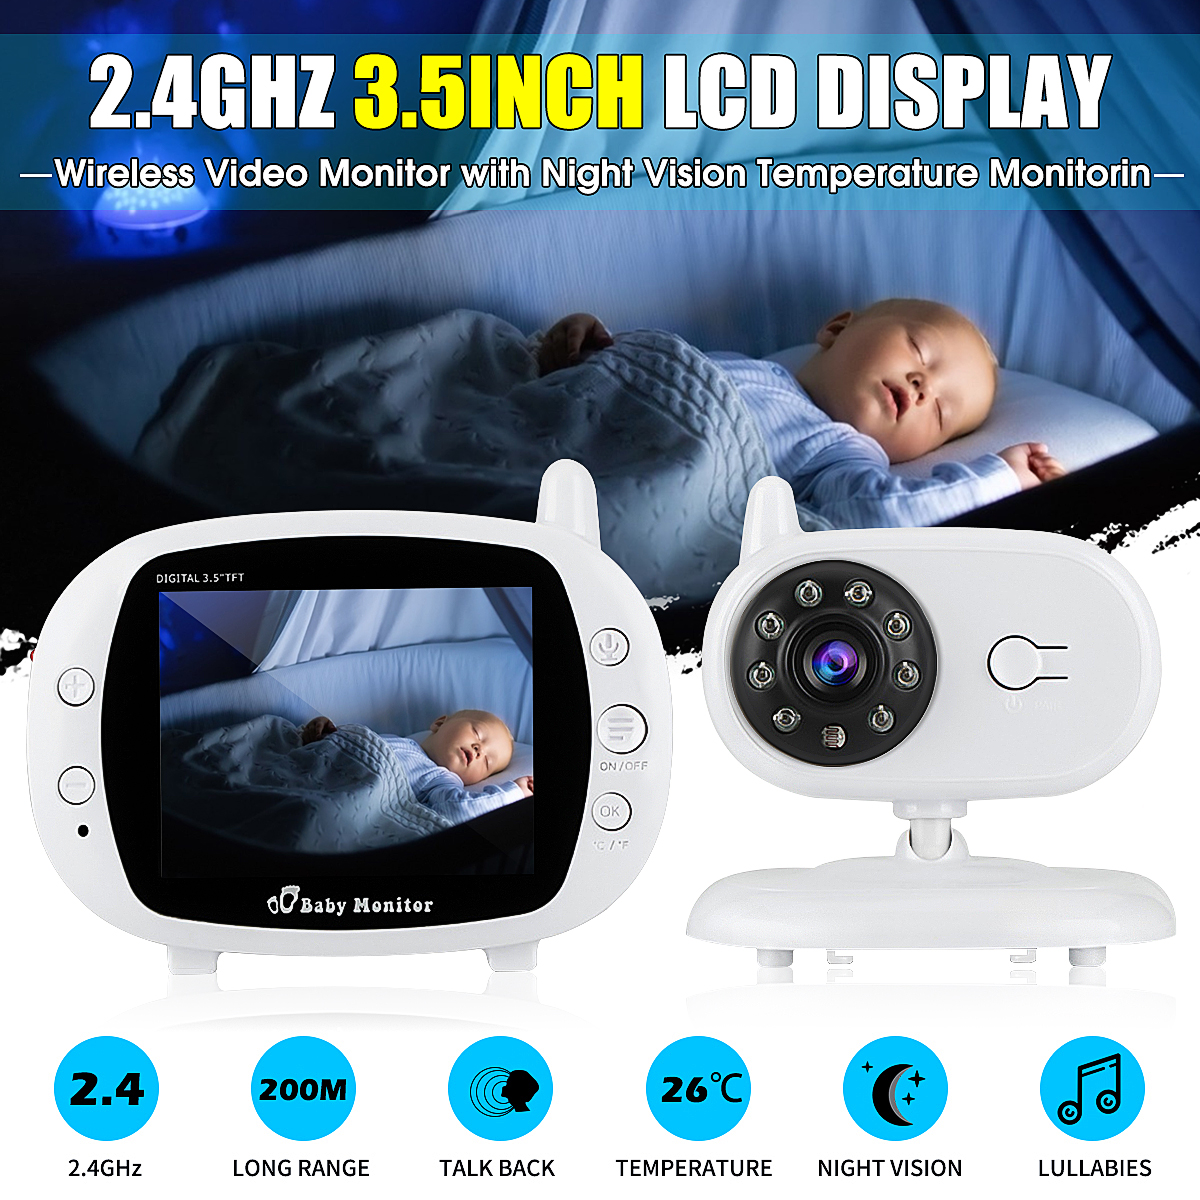 35-inch-Baby-Monitor-24GHz-Video-LCD-Digital-Camera-Night-Vision-Temperature-Monitoring-Monitors-1573439-1